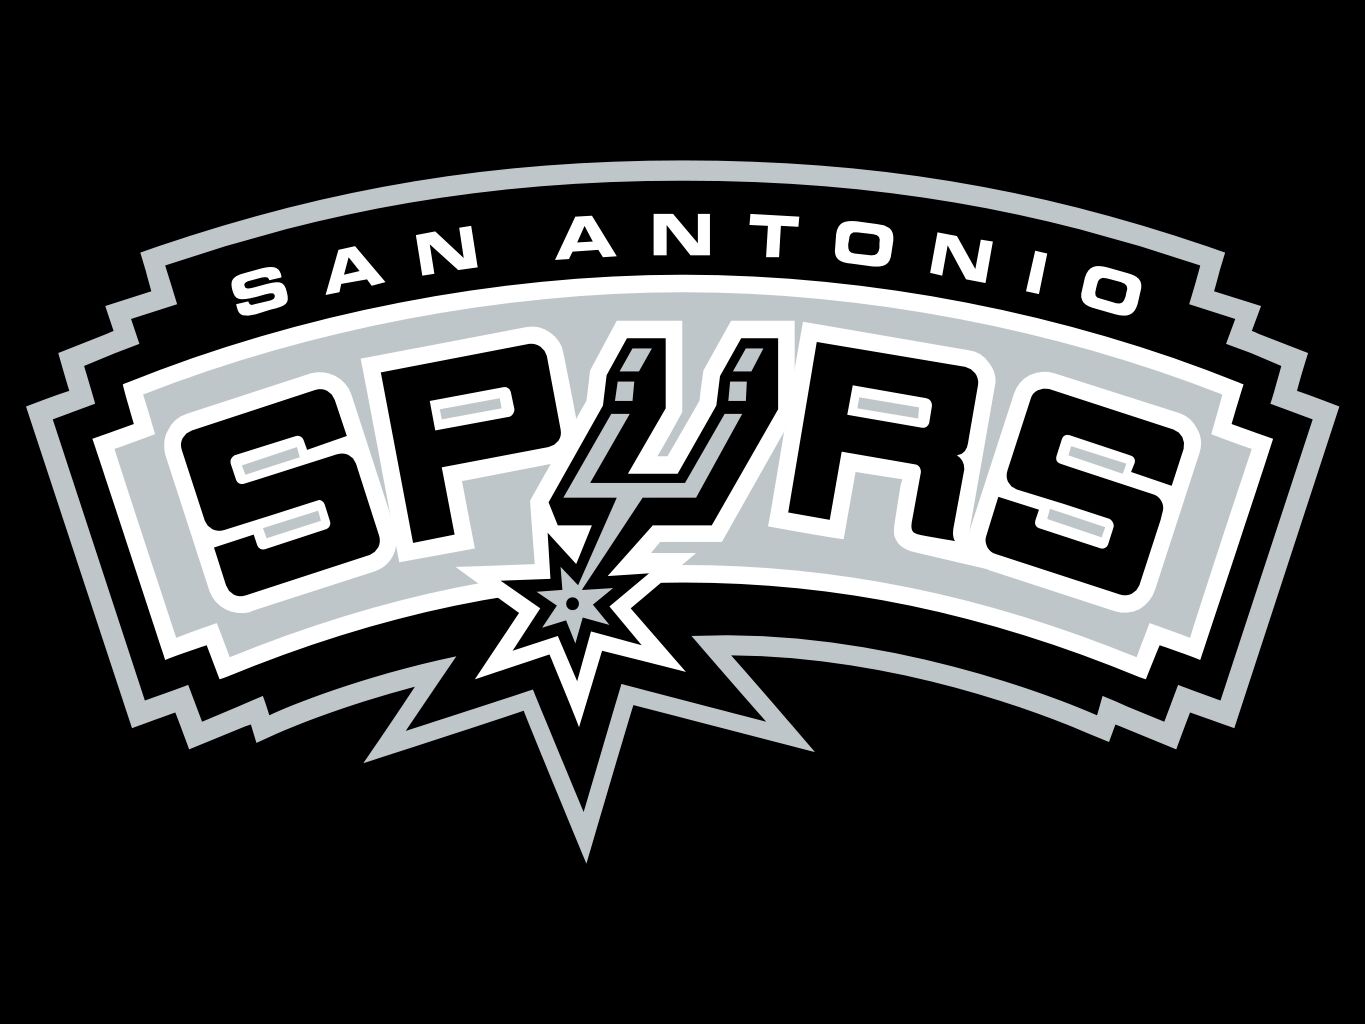 San Antonio Spurs Nba Basketball Wikia Fandom